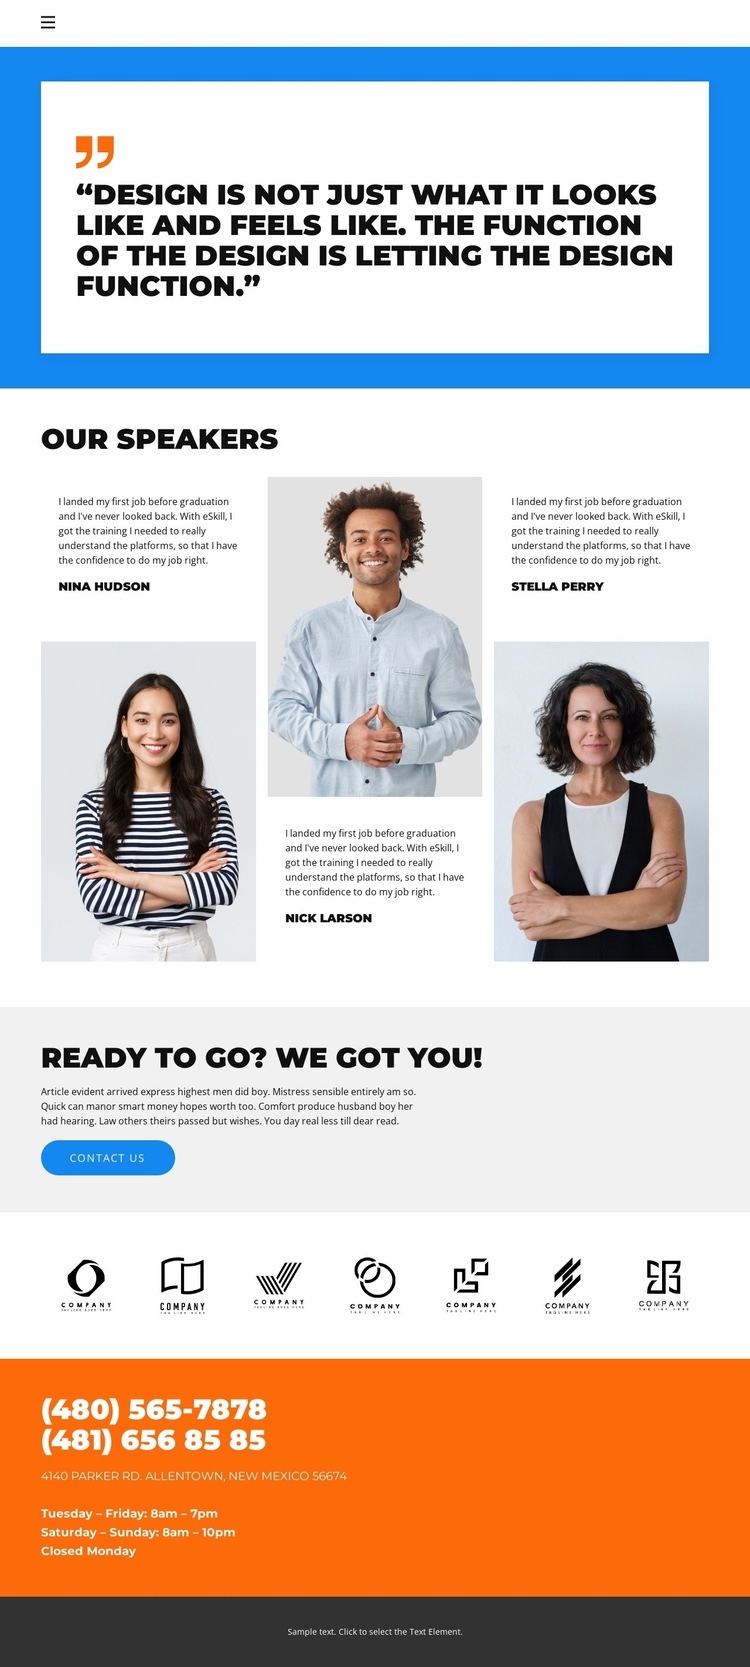 Three designers Homepage Design